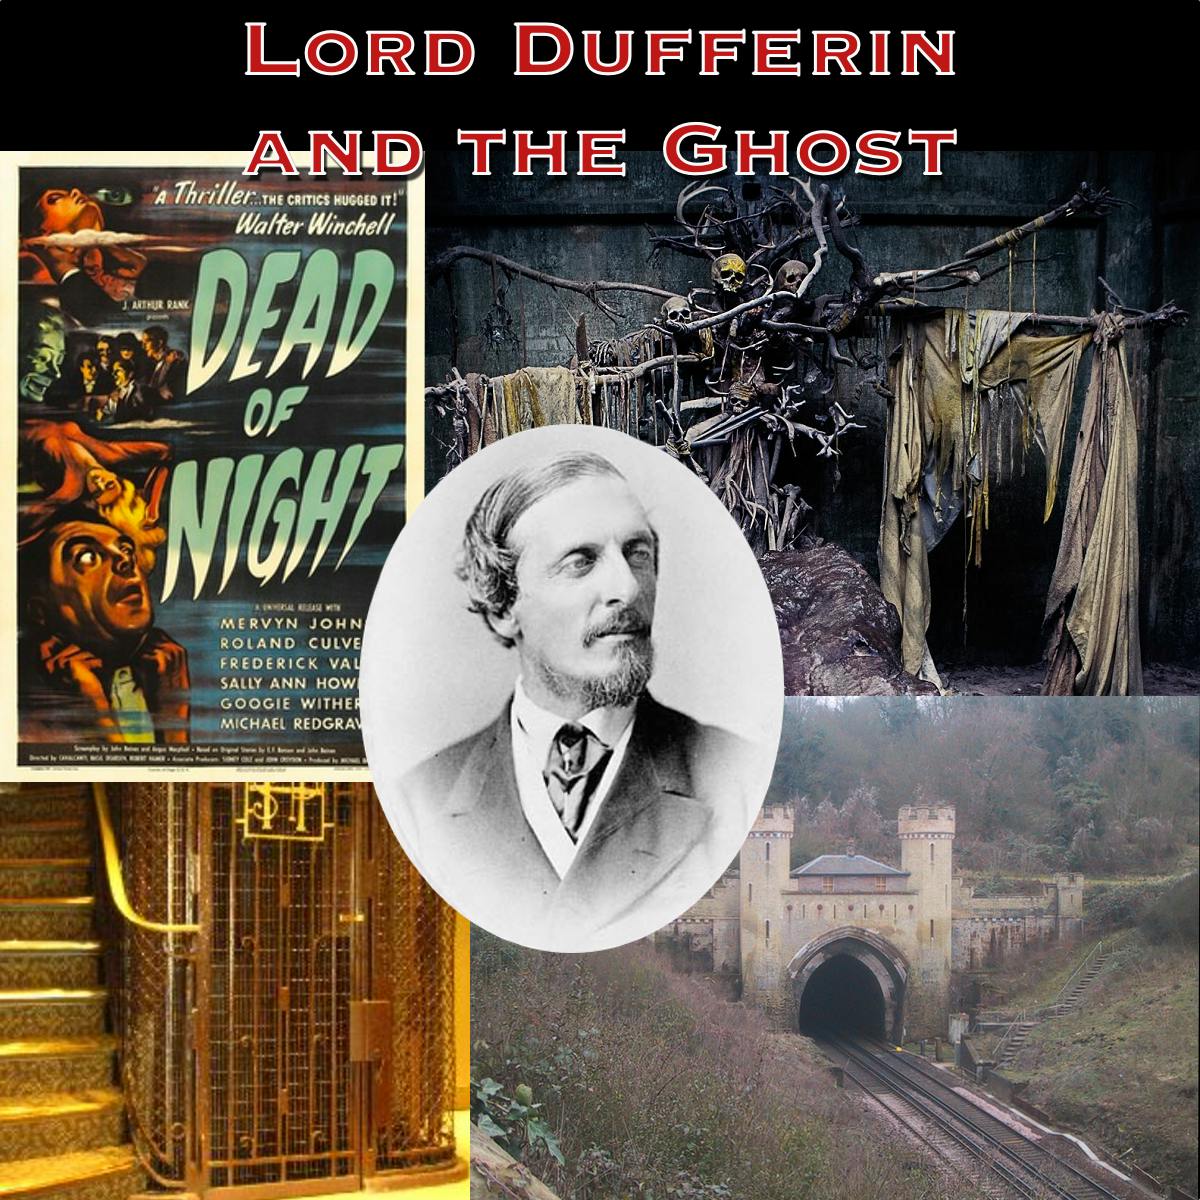 237 - Lord Dufferin's Ghost